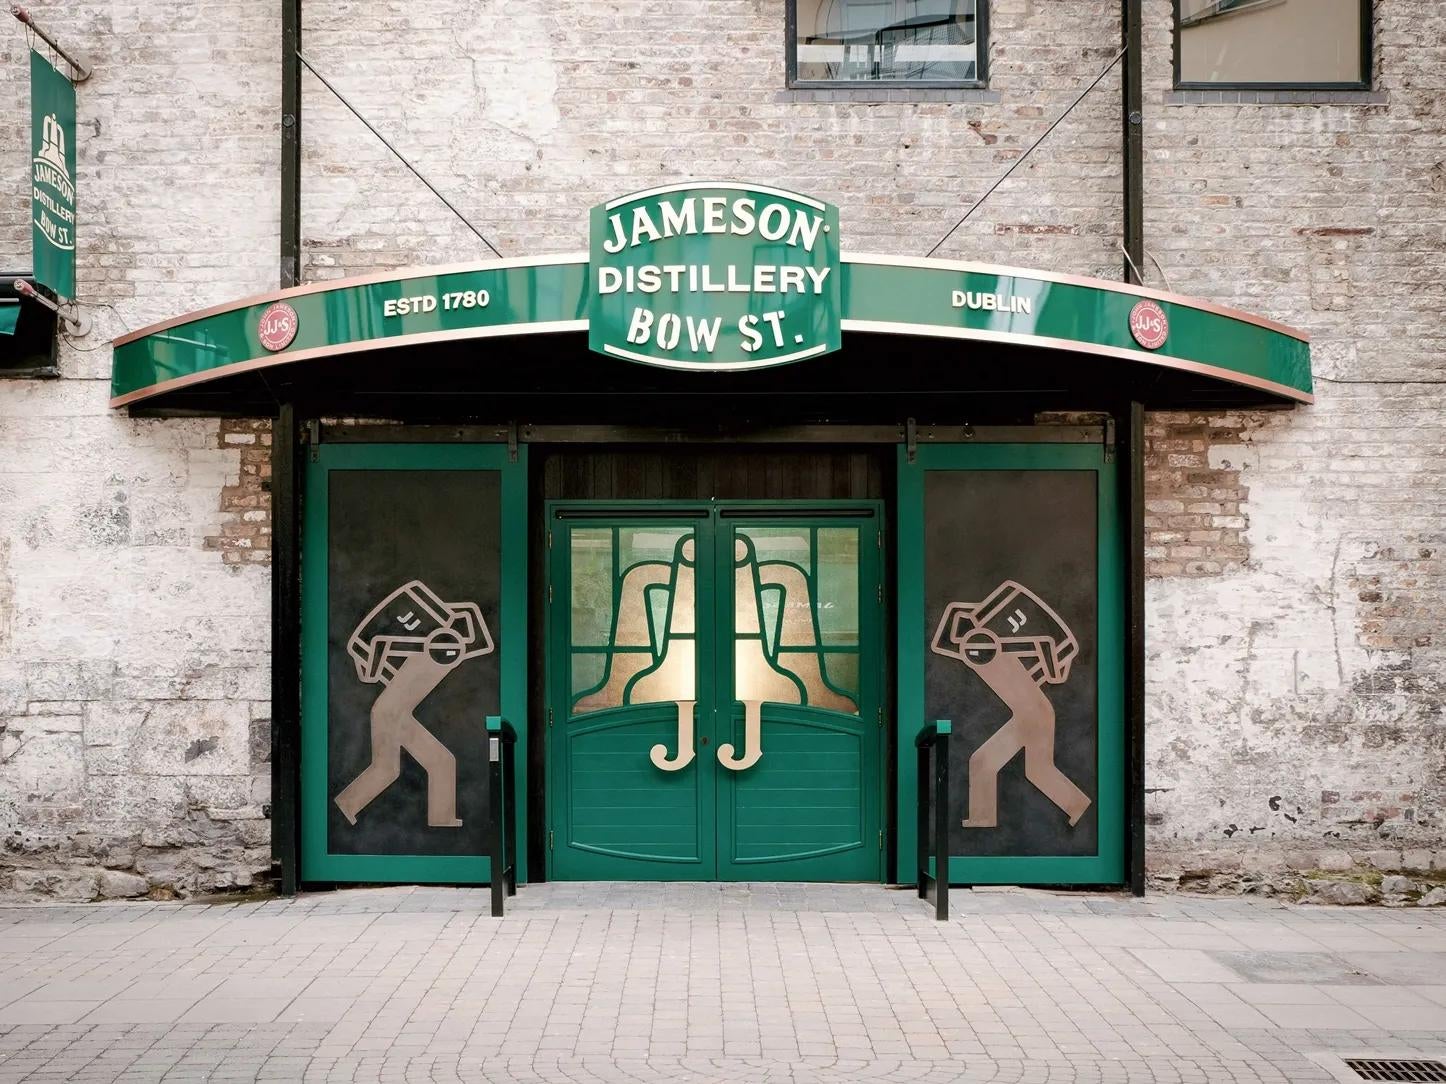 Entry to the Jameson Distillery Bow St in Dublin, Ireland.